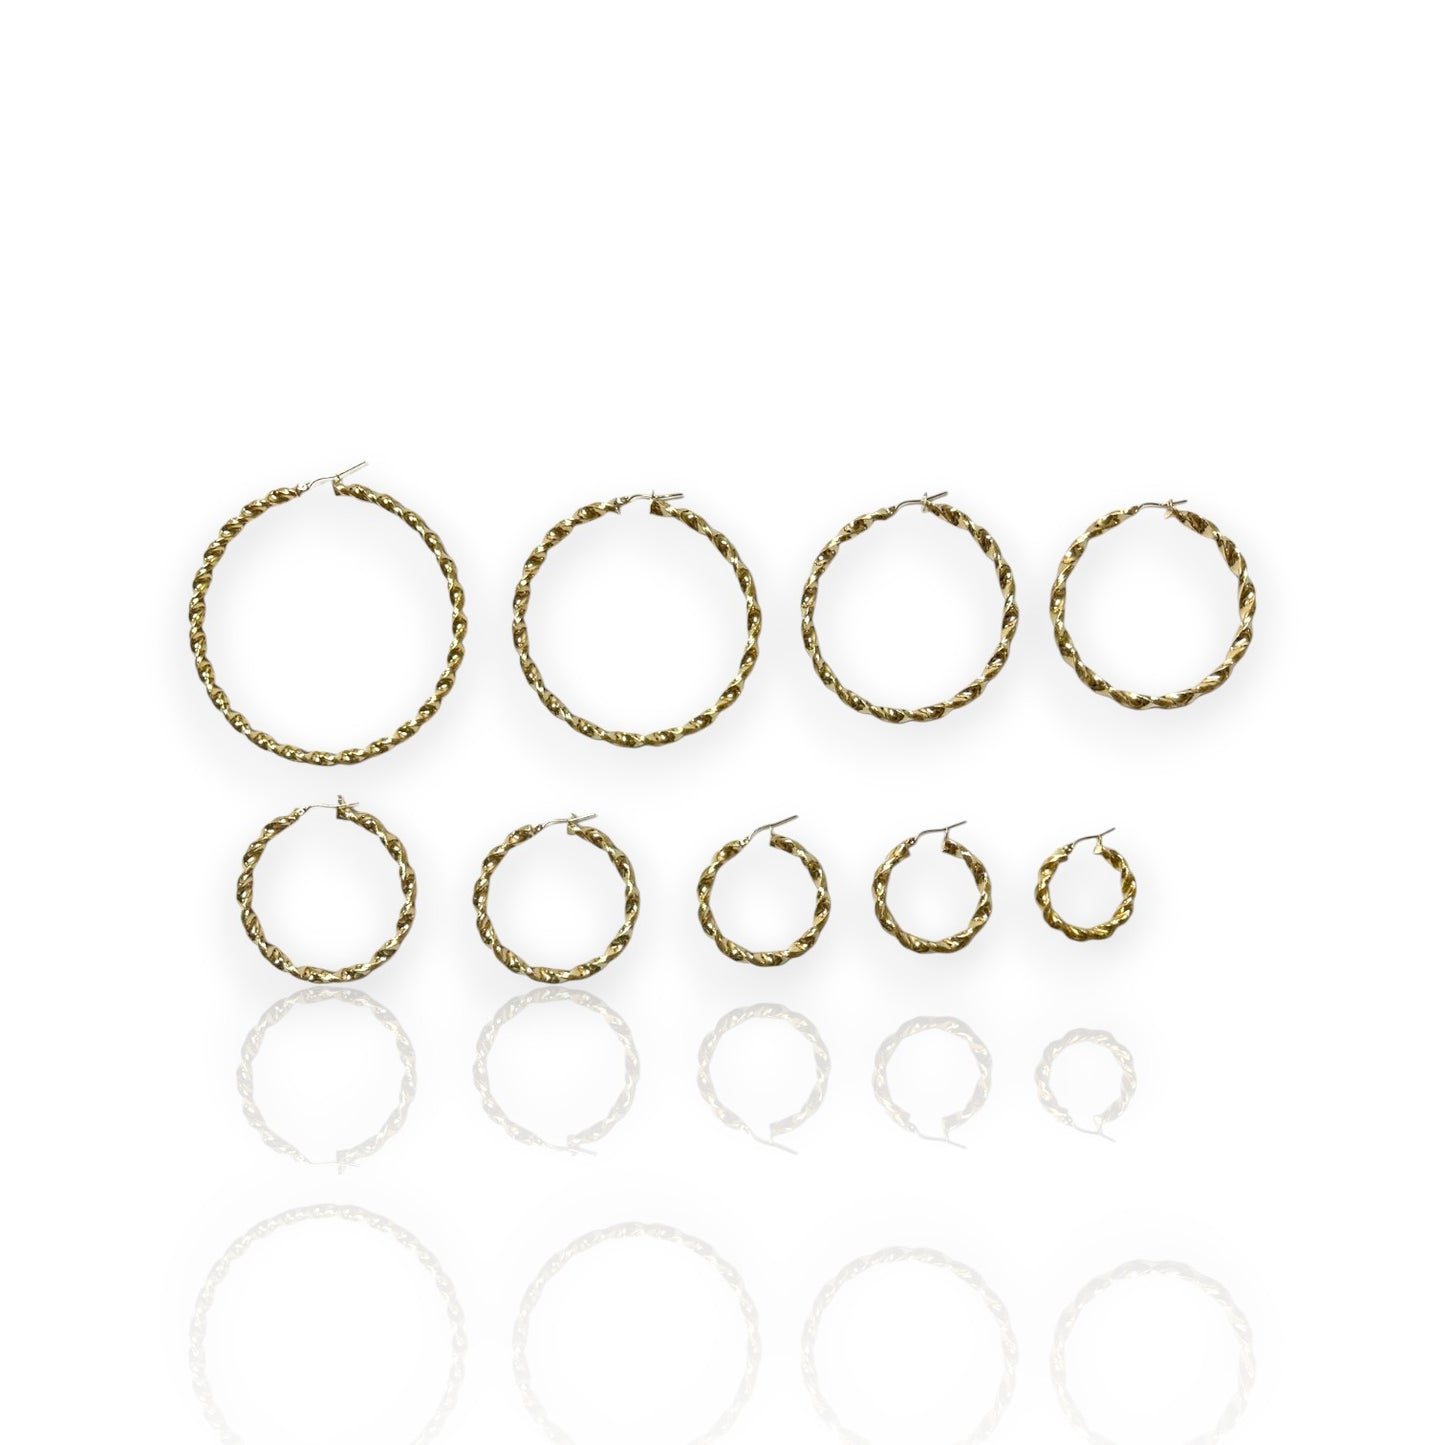 Hoop Earrings - 10K Yellow Gold